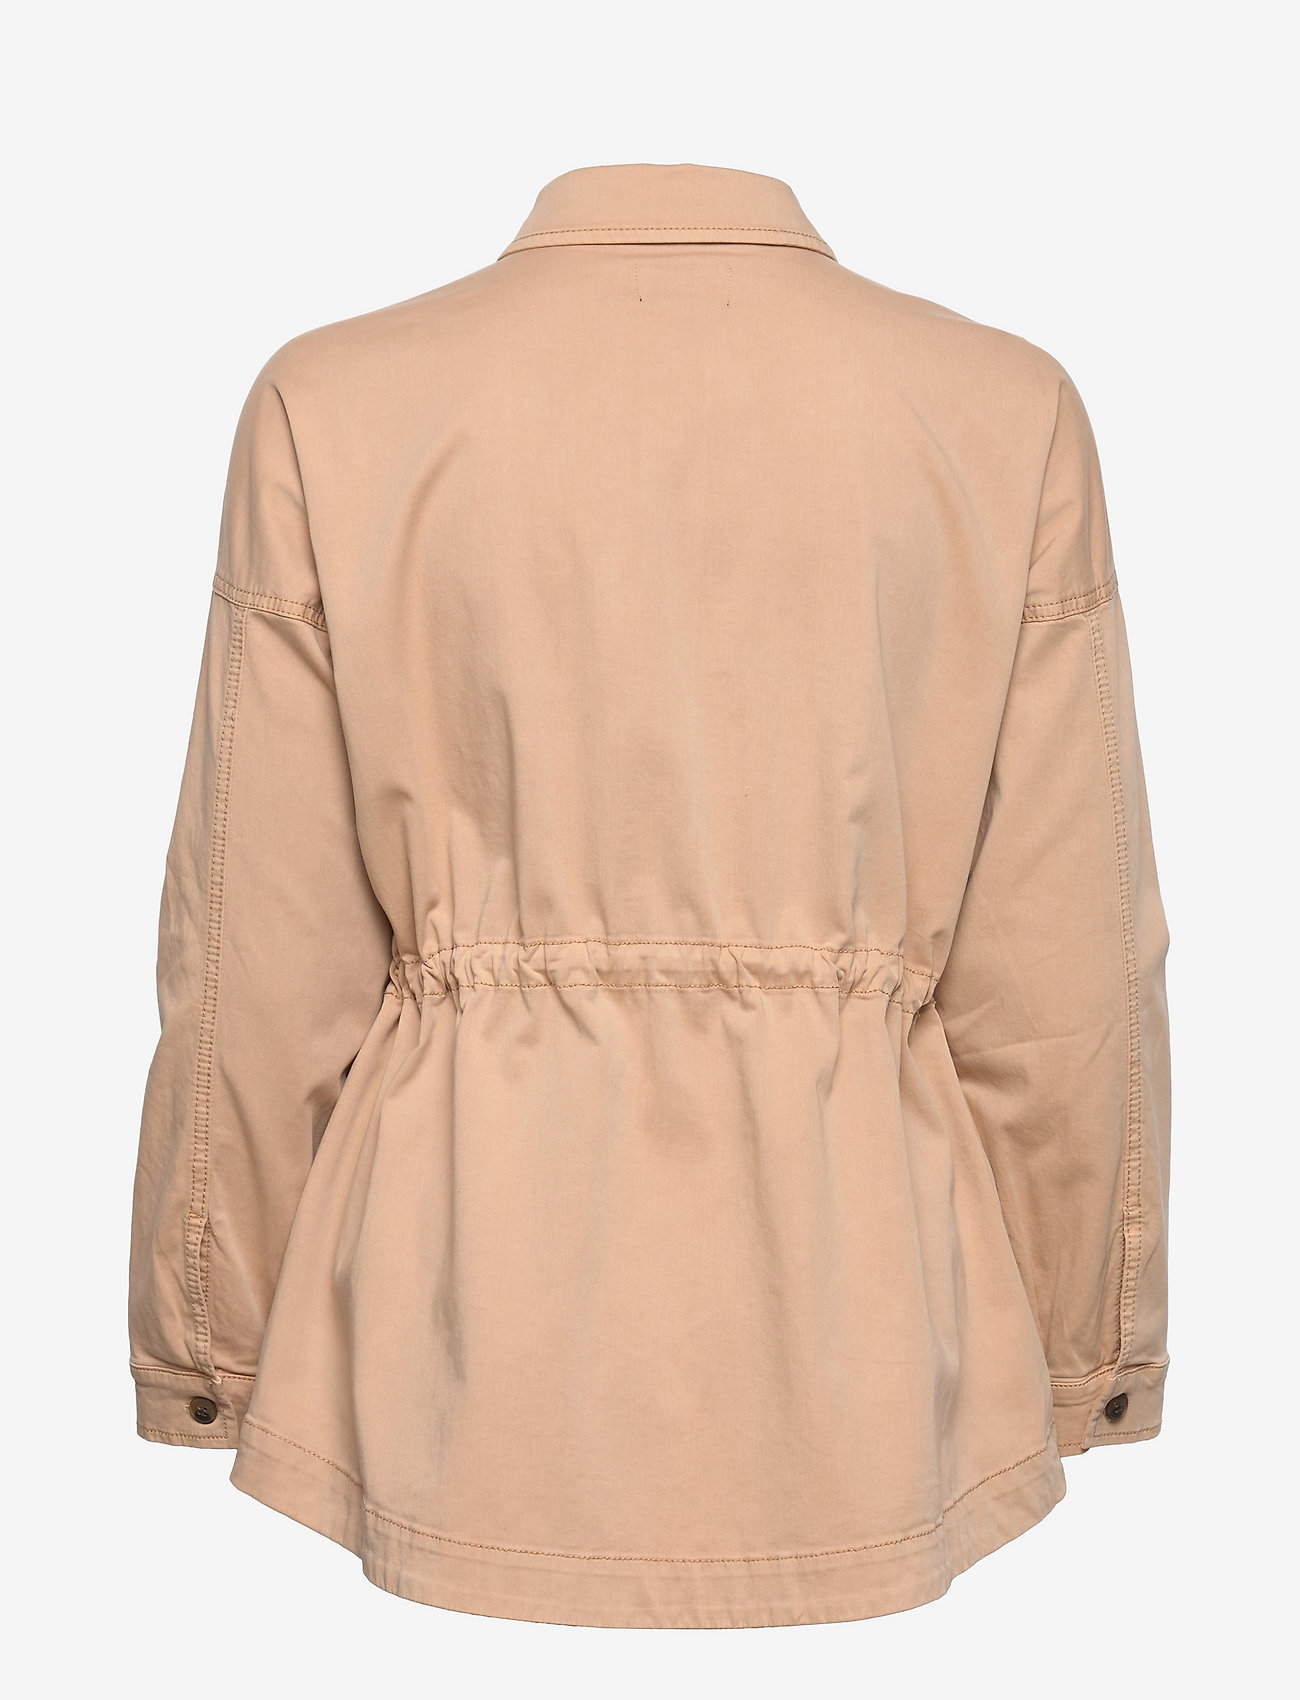 Lexington Clothing - Carly Cotton/Modal Blend Overshirt - kobiety - beige - 1